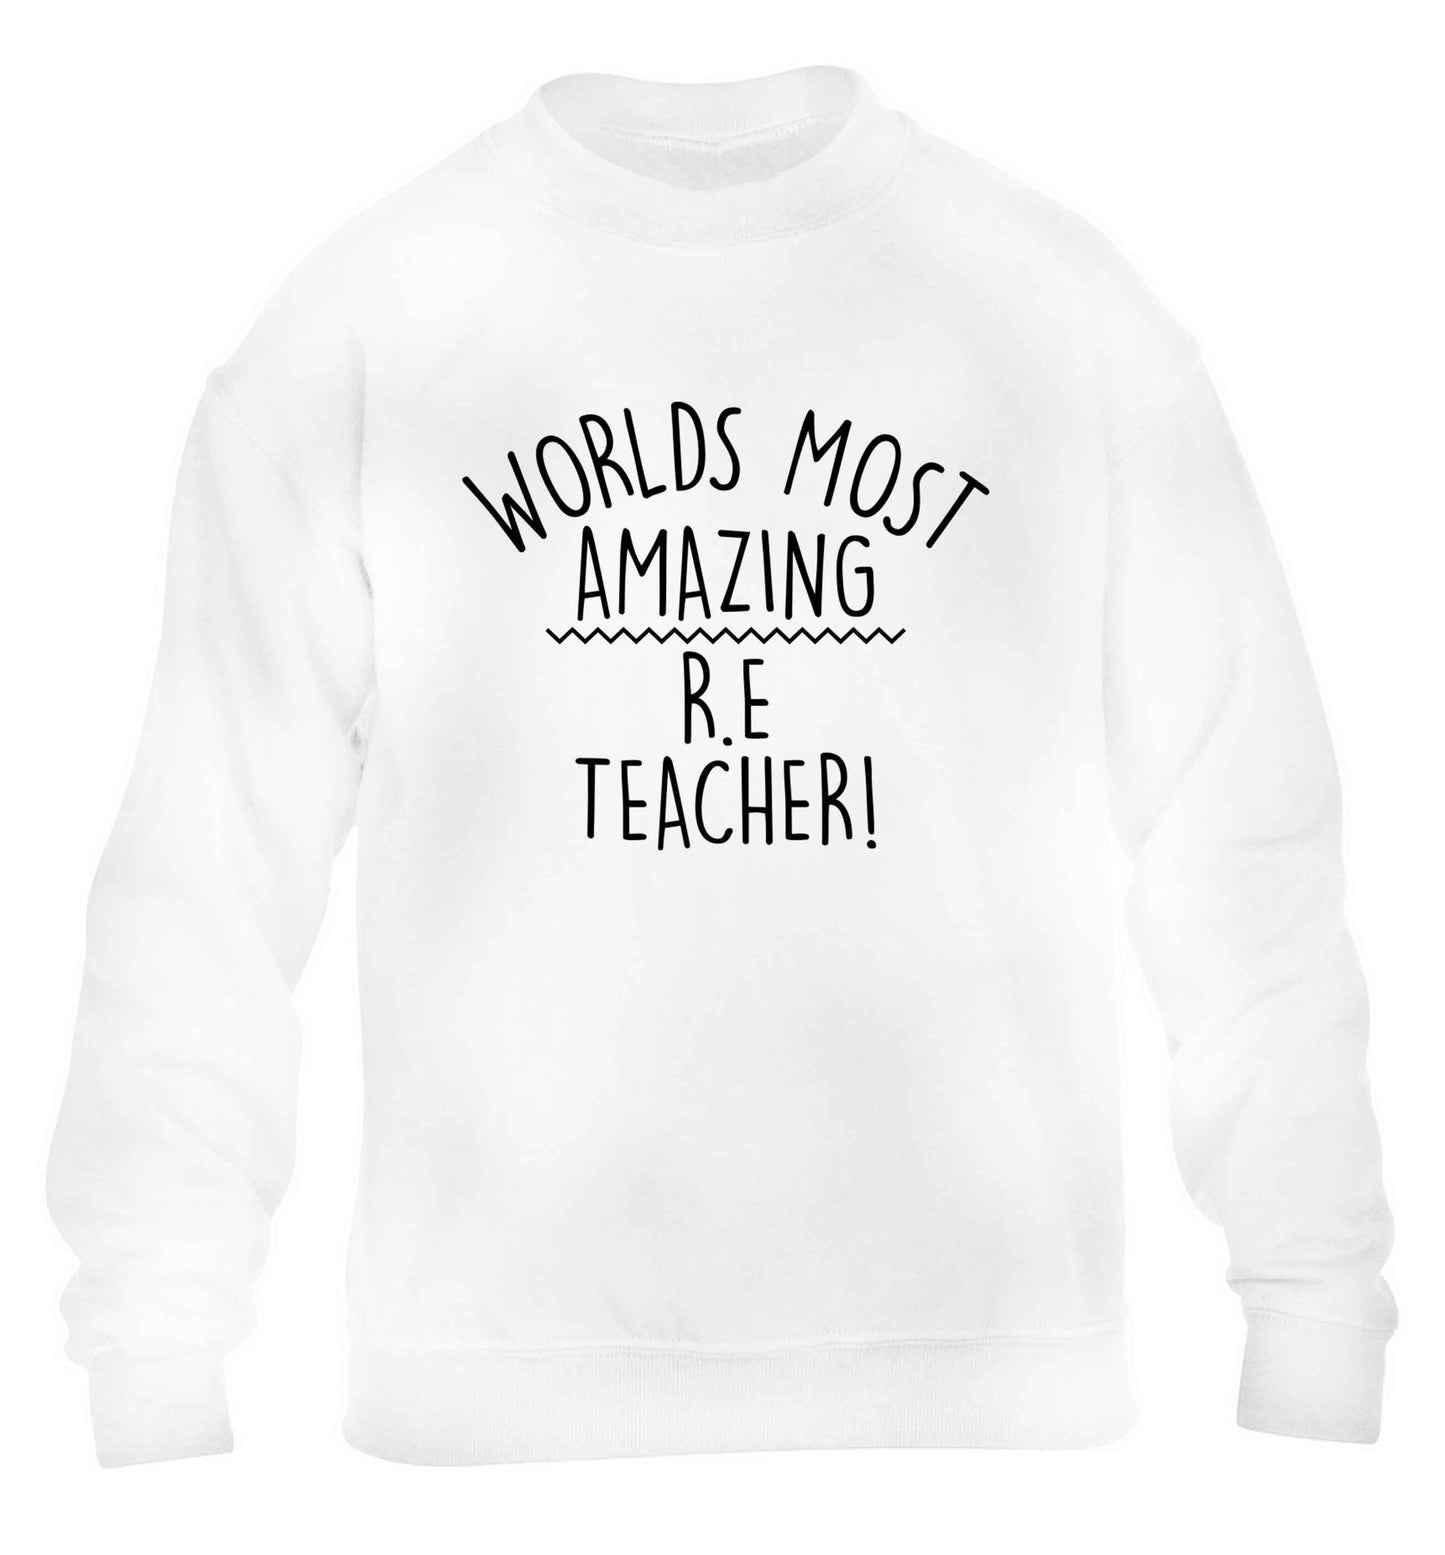 Worlds most amazing R.E teacher children's white sweater 12-13 Years